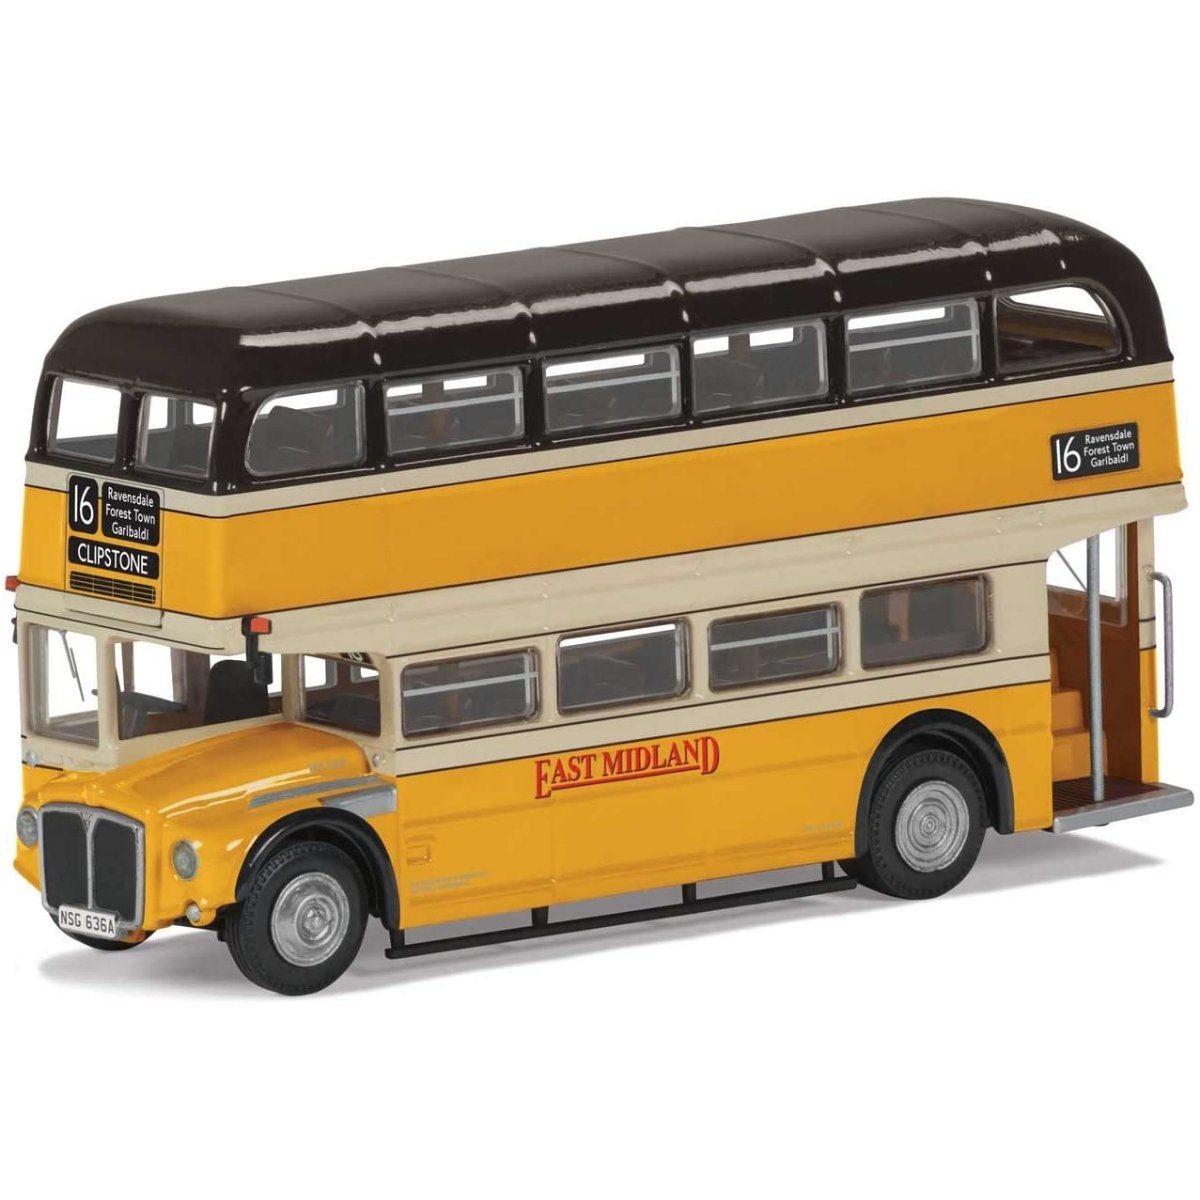 Corgi OM46309A Routemaster, East Midland, 16 Clipstone - Phillips Hobbies